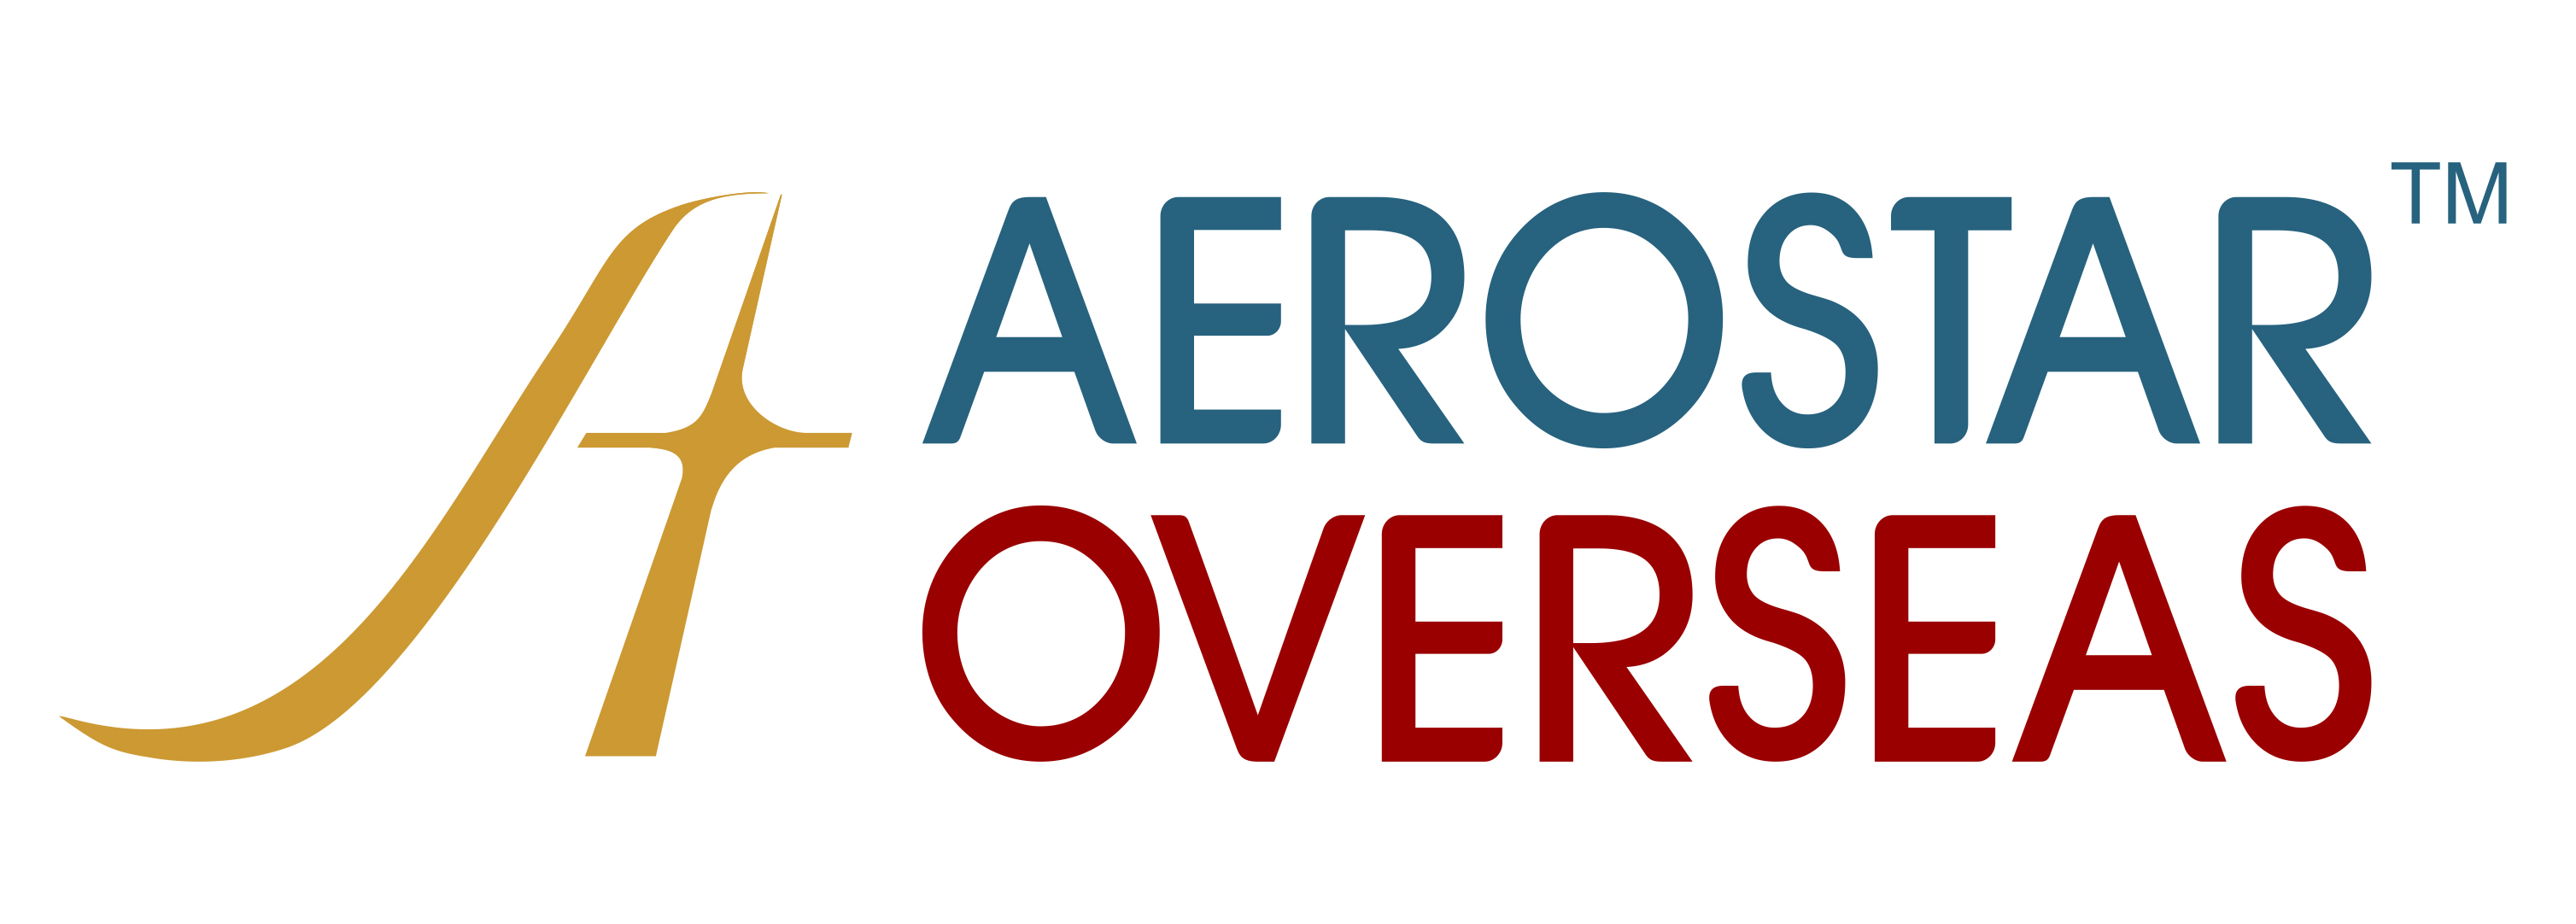 aerostaroverseas|Education Consultants|Education